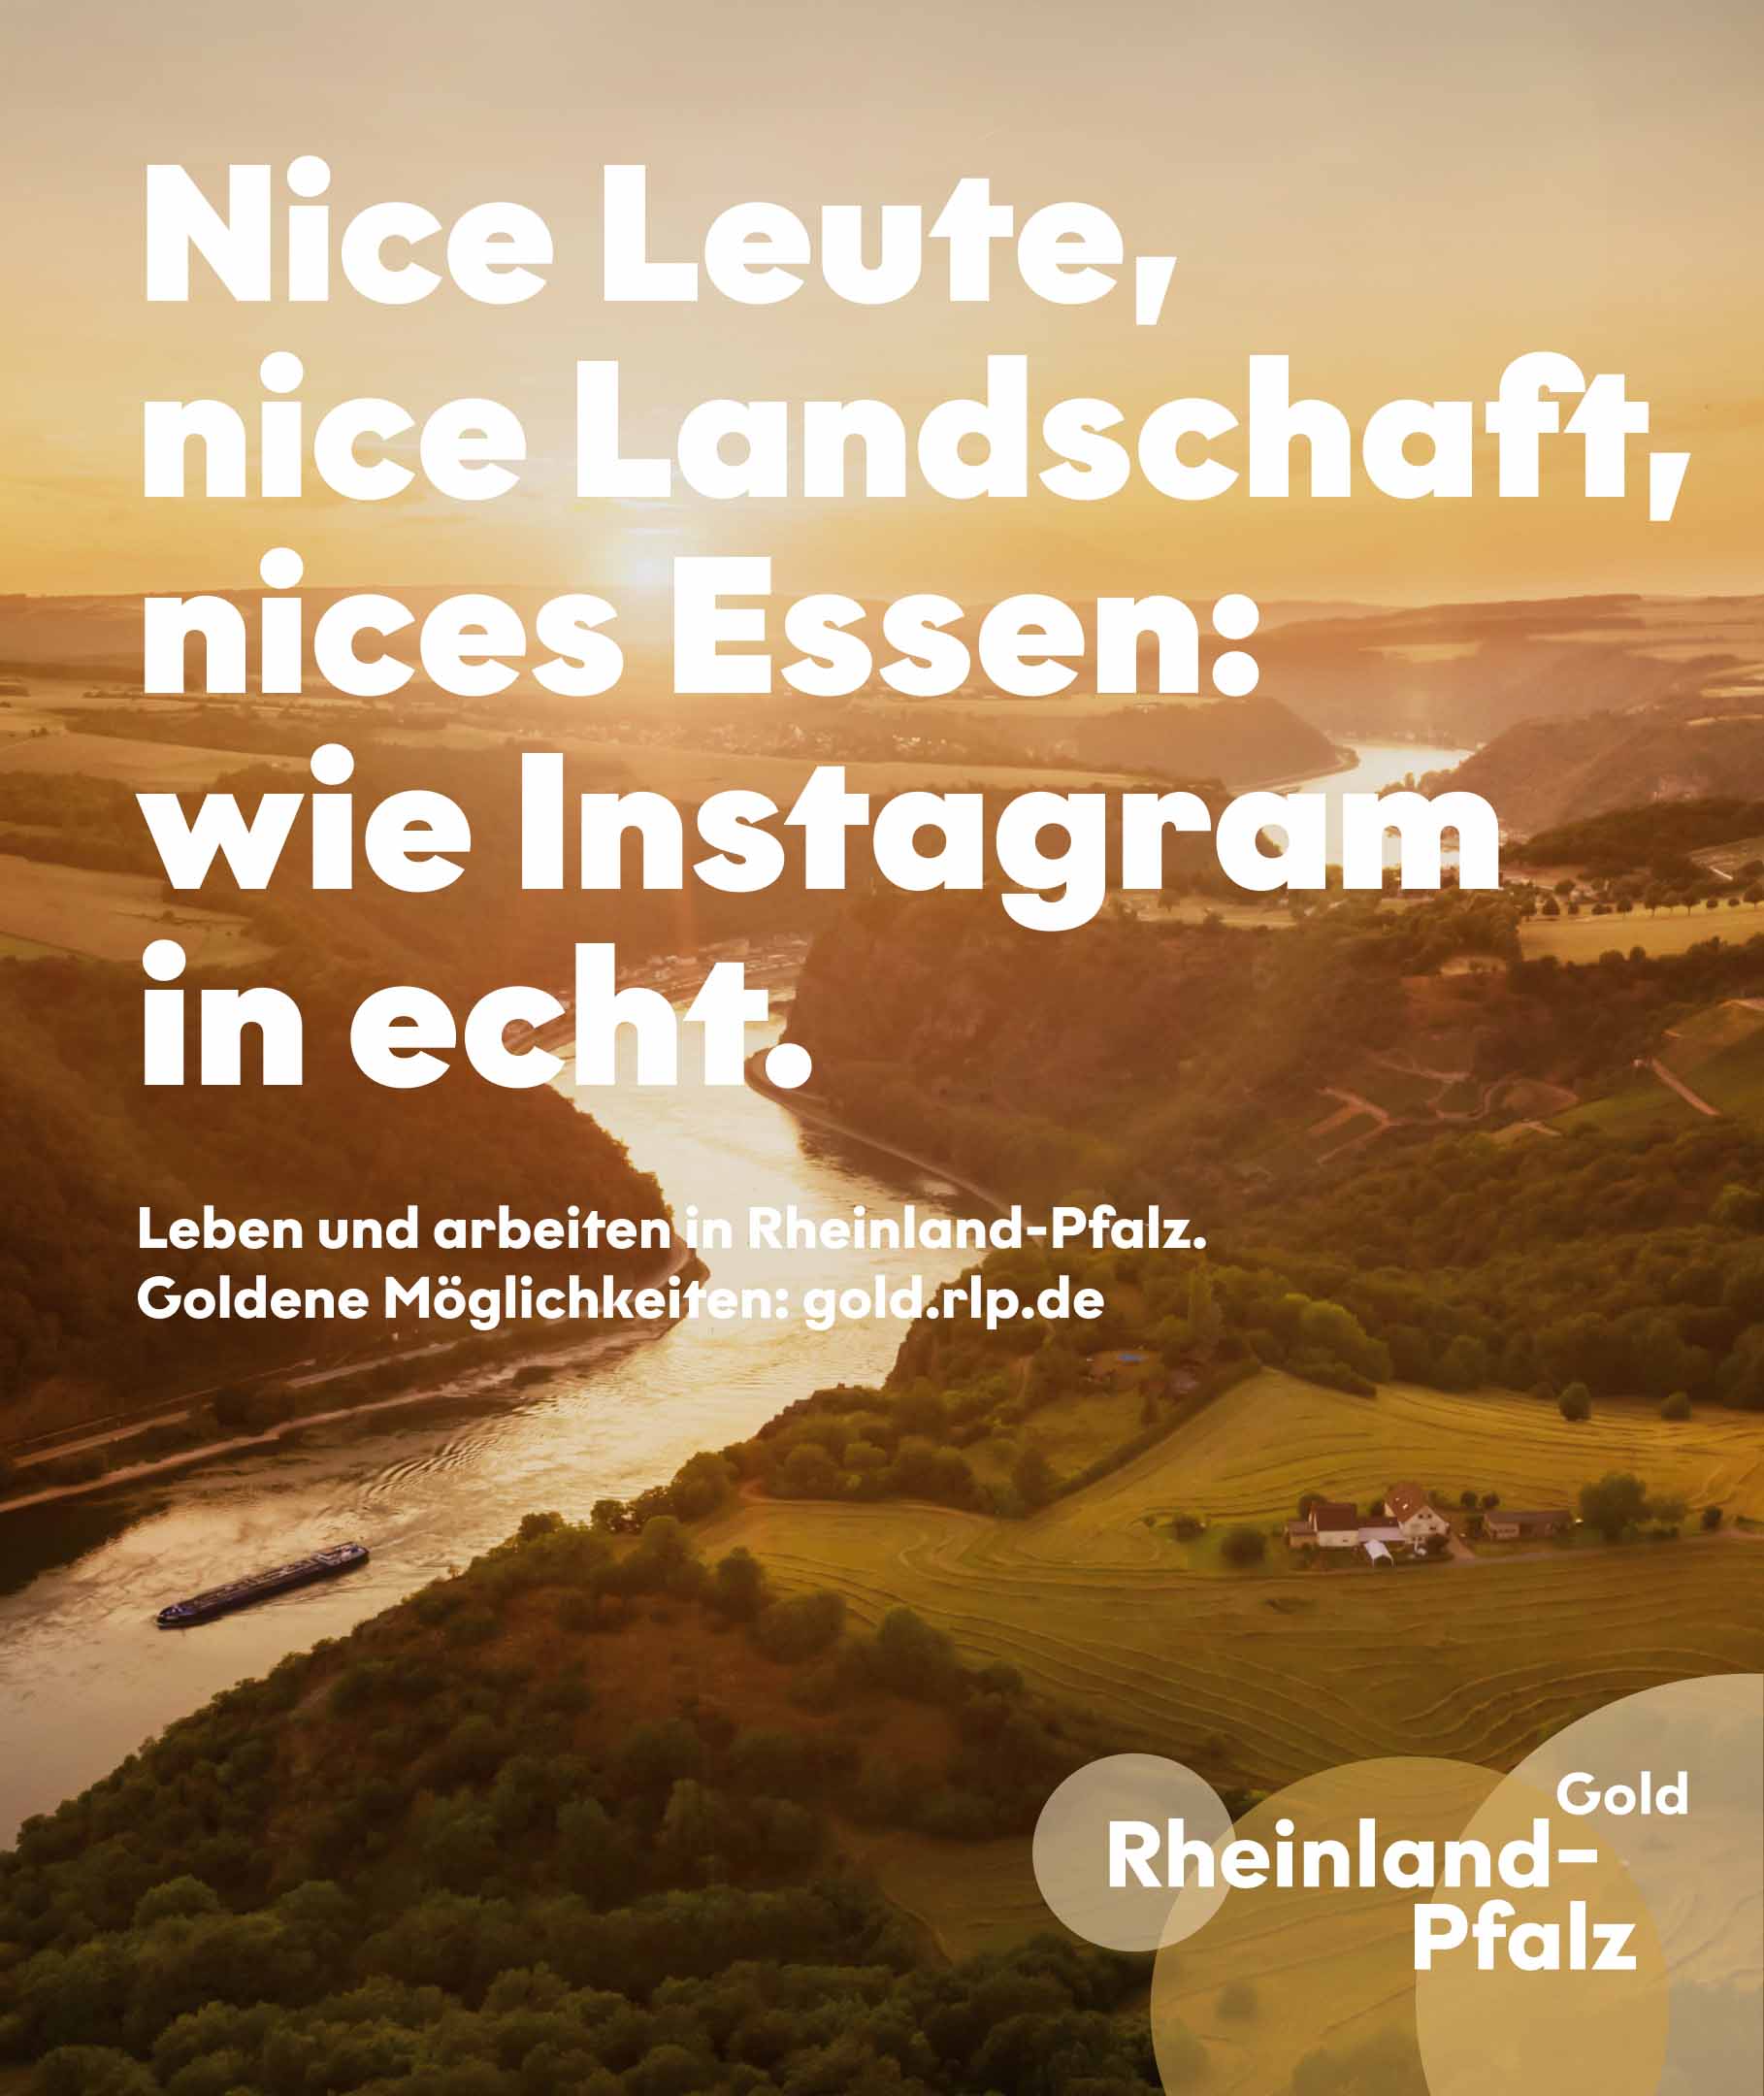 Kampagnenmotiv: Nice Leute, nice Landschaft, nices Essen: wie Instagram in echt.